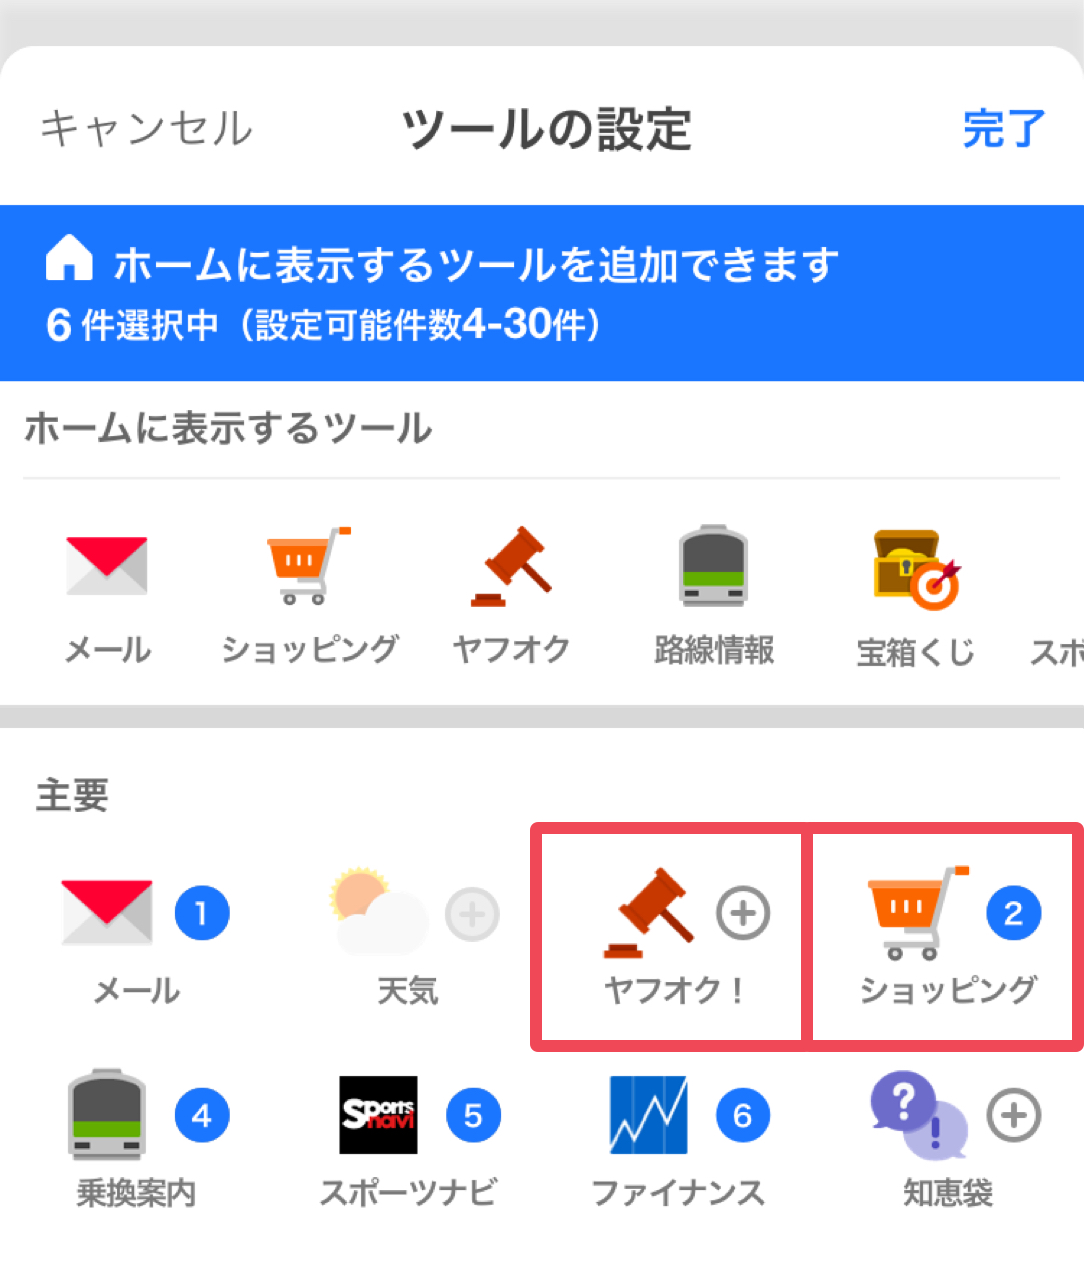 Yahoo Japanアプリ ホーム画面アイコン列のリニューアルについて スマートフォン向け Yahoo Japan 公式ブログ